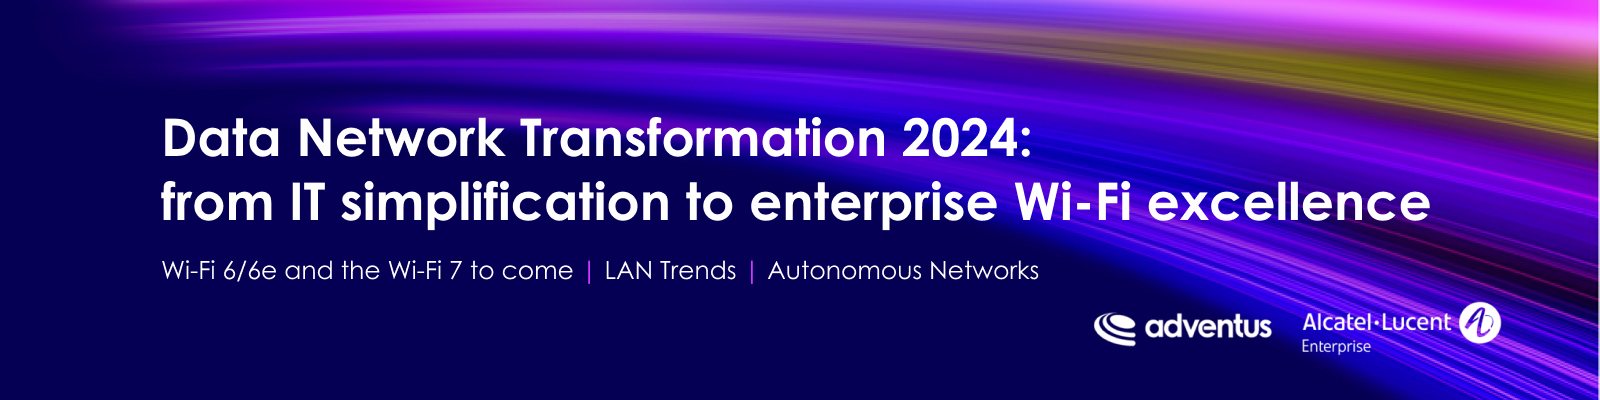 Data Network Transformation 2024